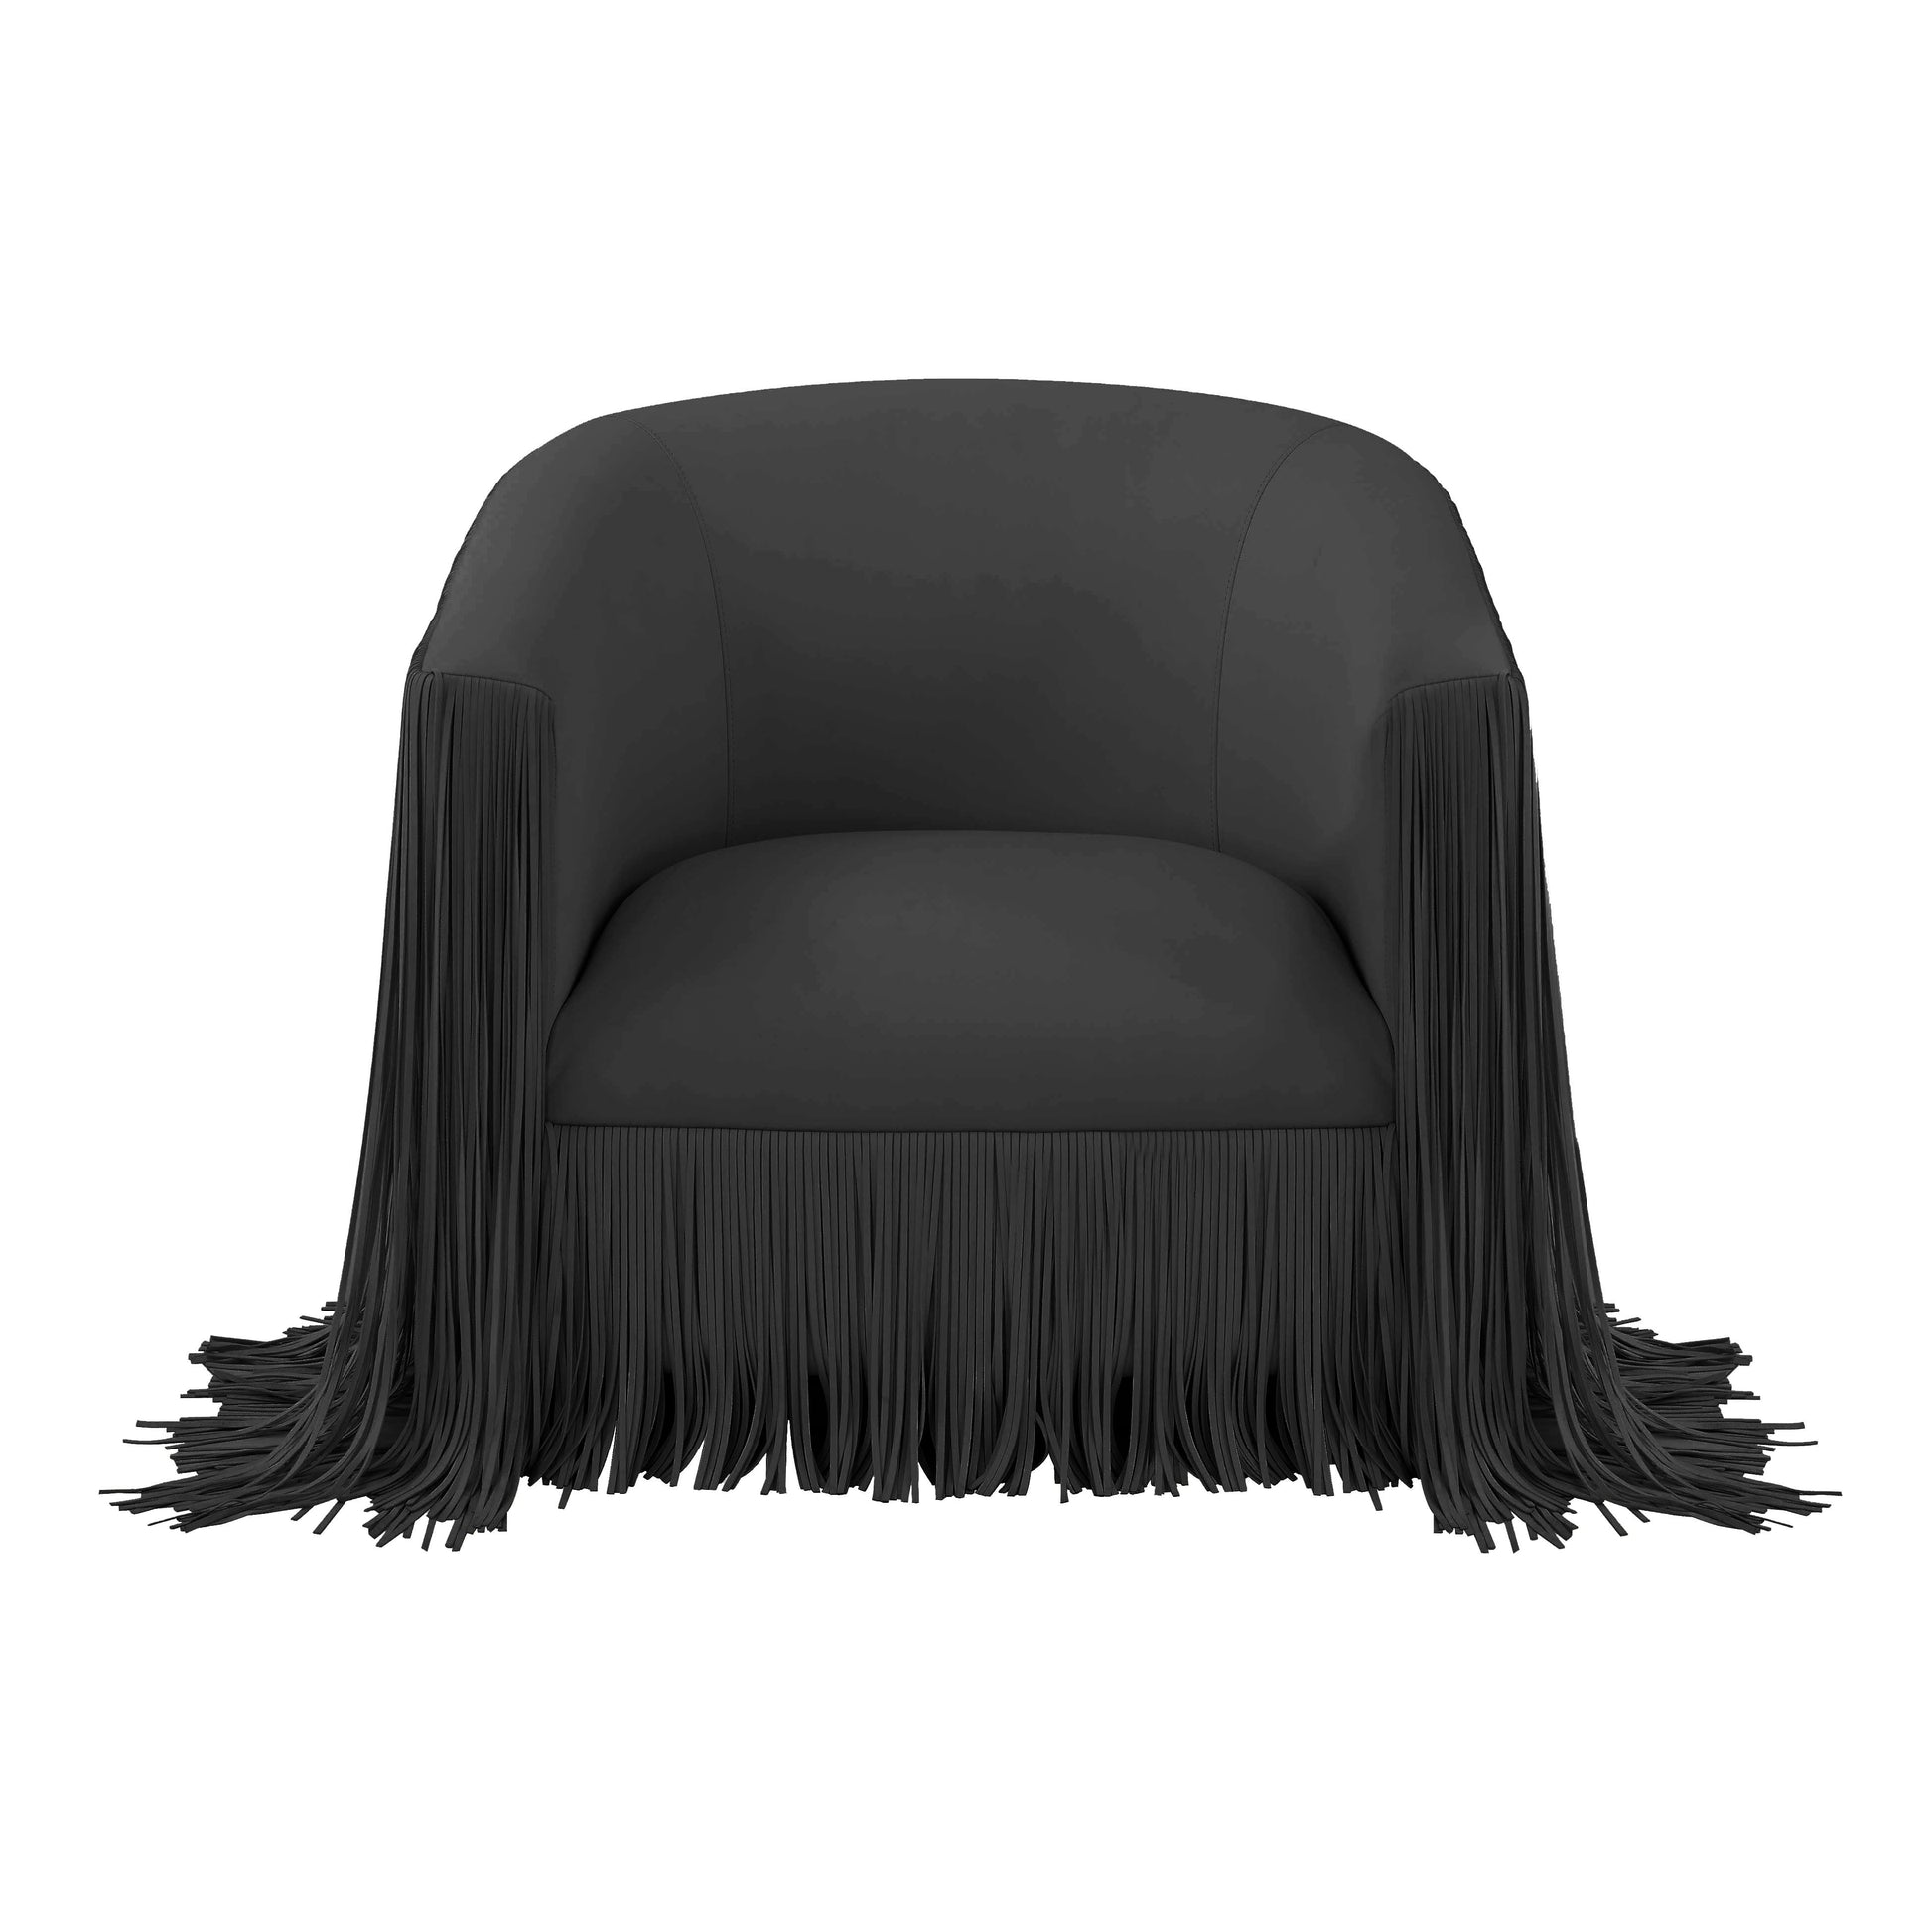 Shag Me Black Vegan Leather Swivel Chair by TOV